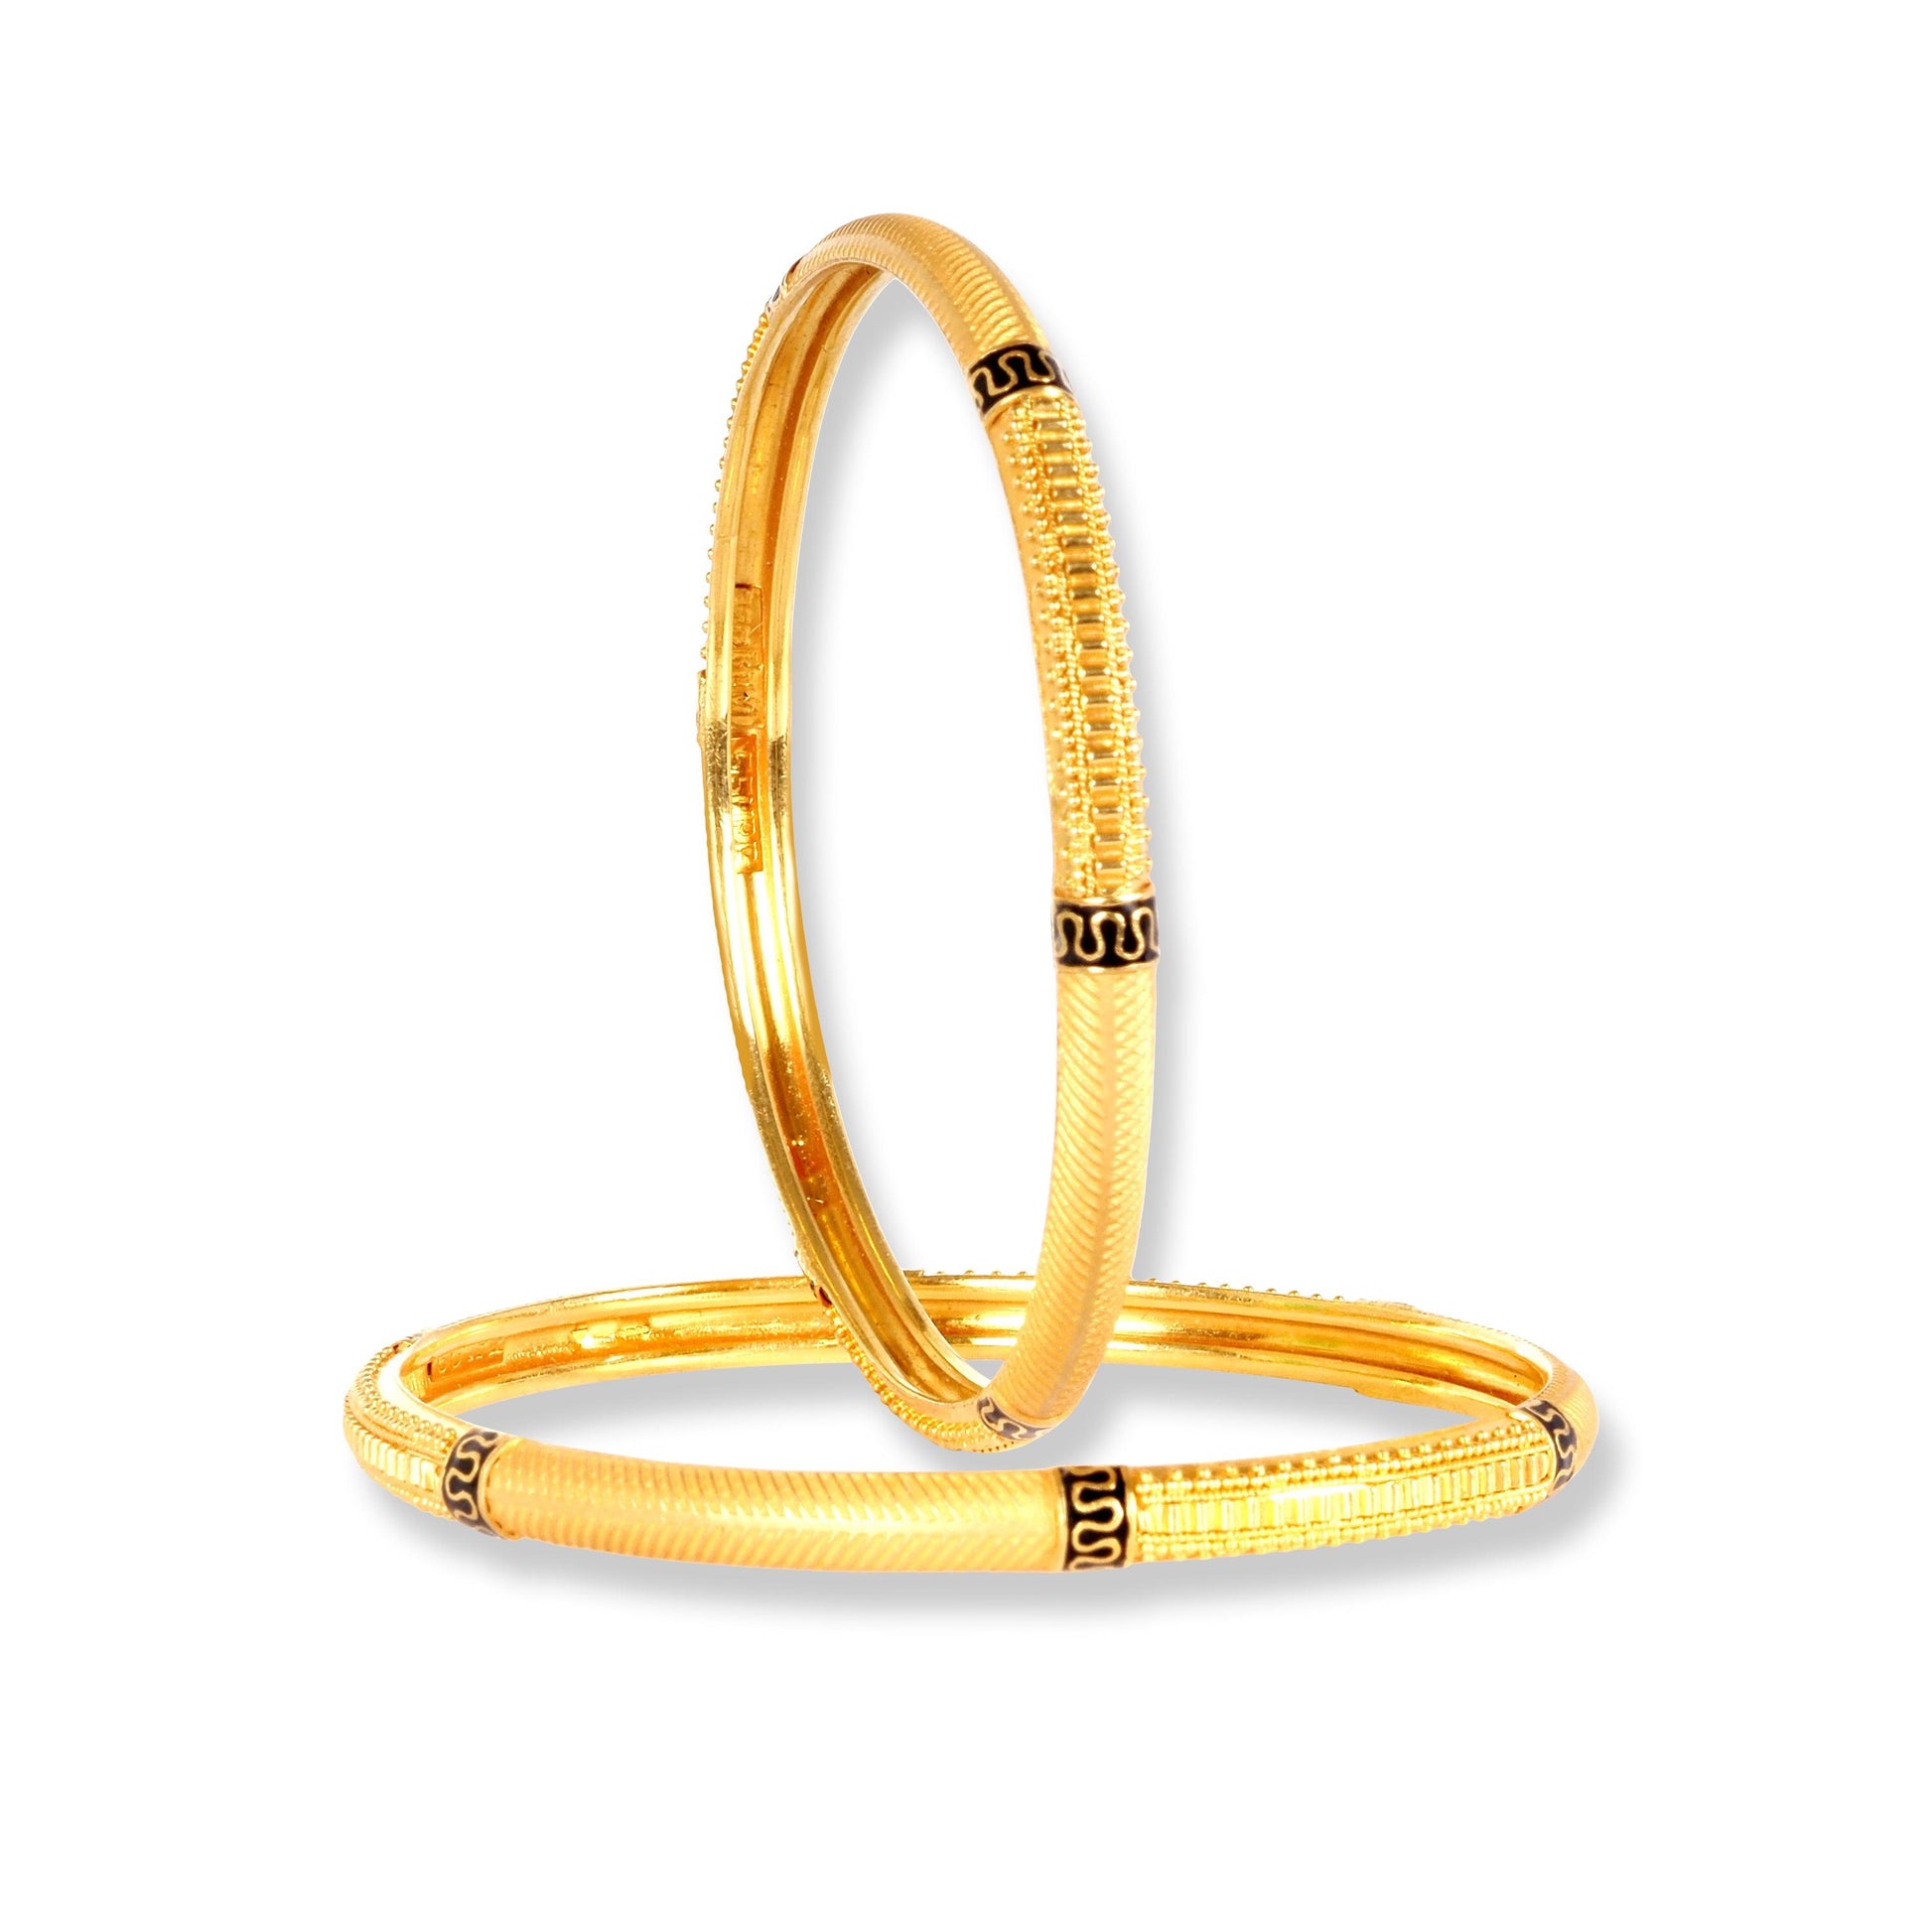 22ct Gold Bangles with Black Rhodium Plating (Set of 2) B-8540 - Minar Jewellers